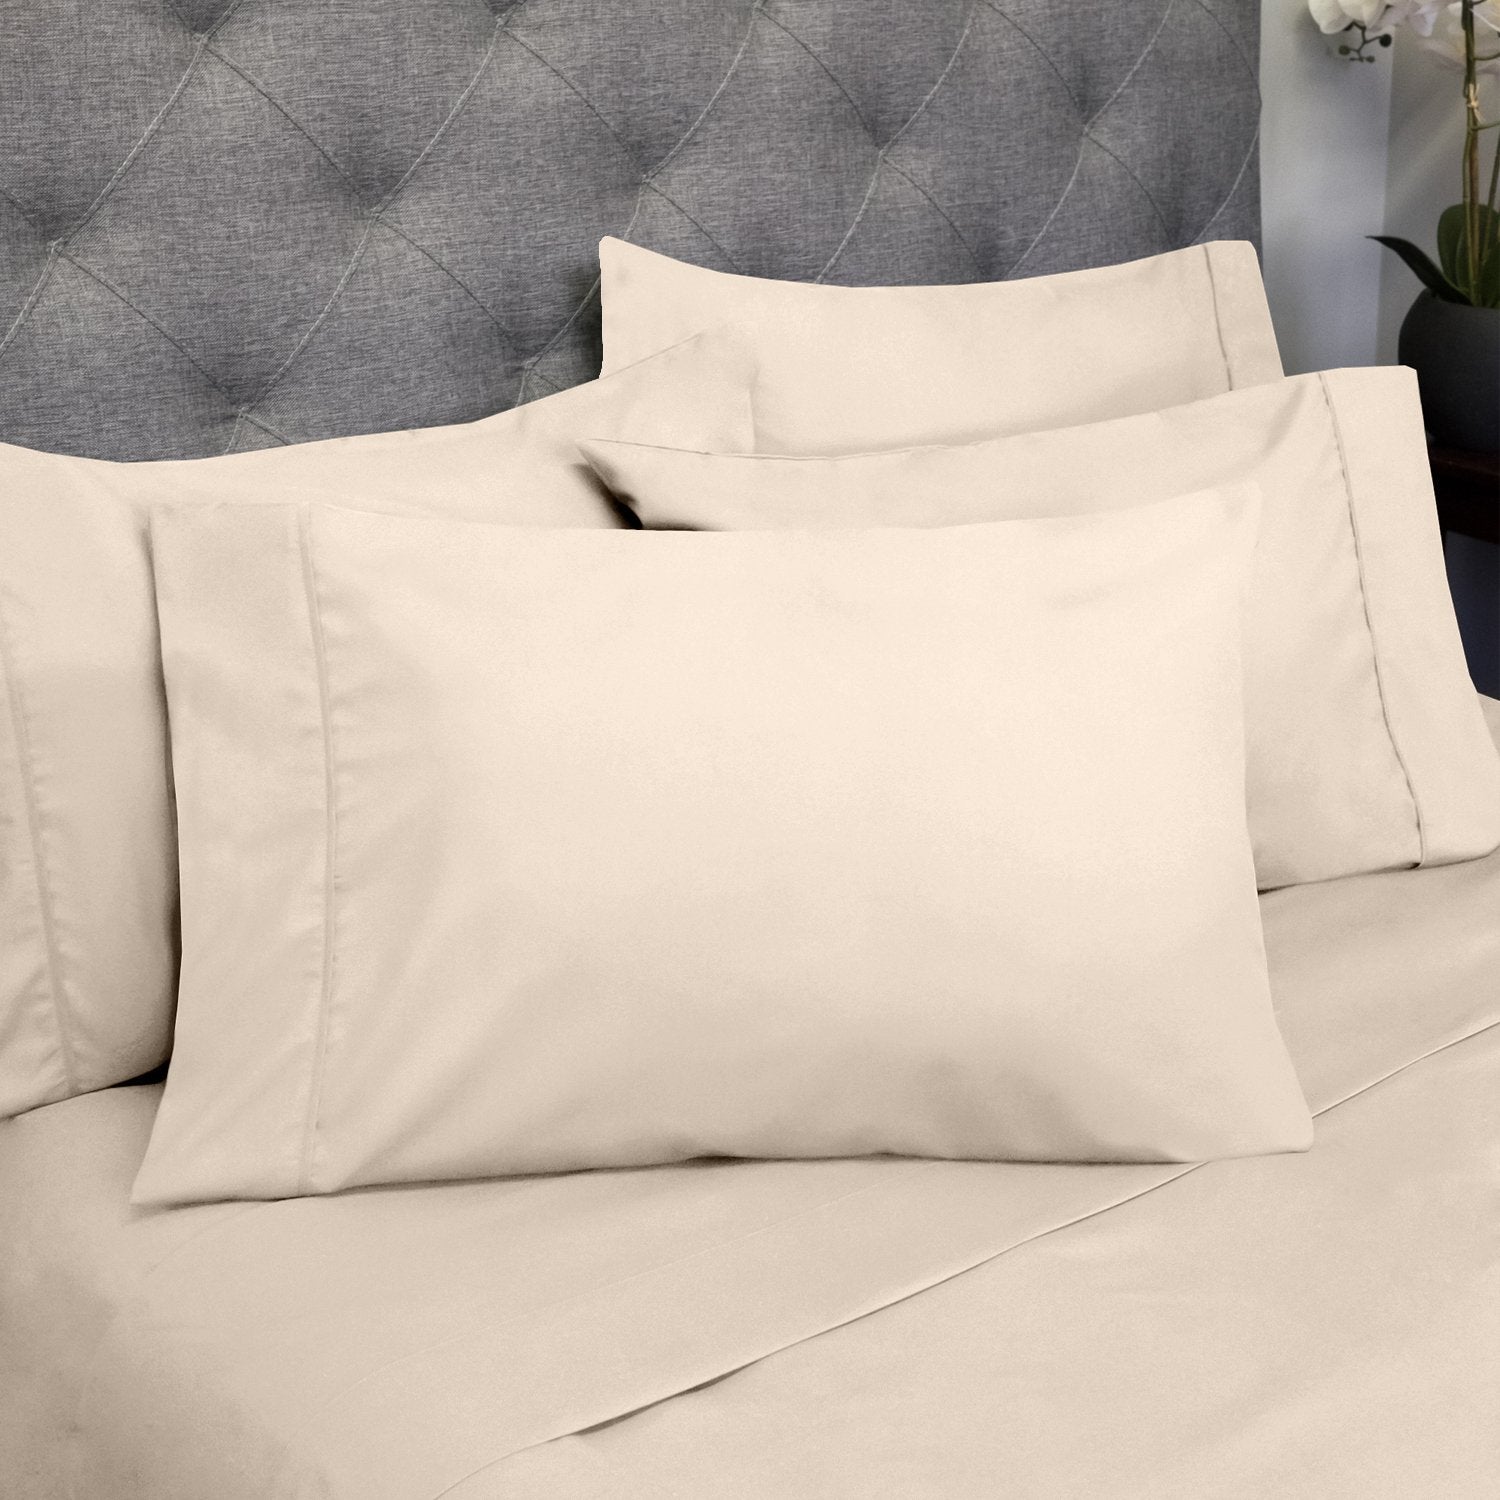 Deluxe 6-Piece Bed Sheet Set (Beige) - Pillowcases